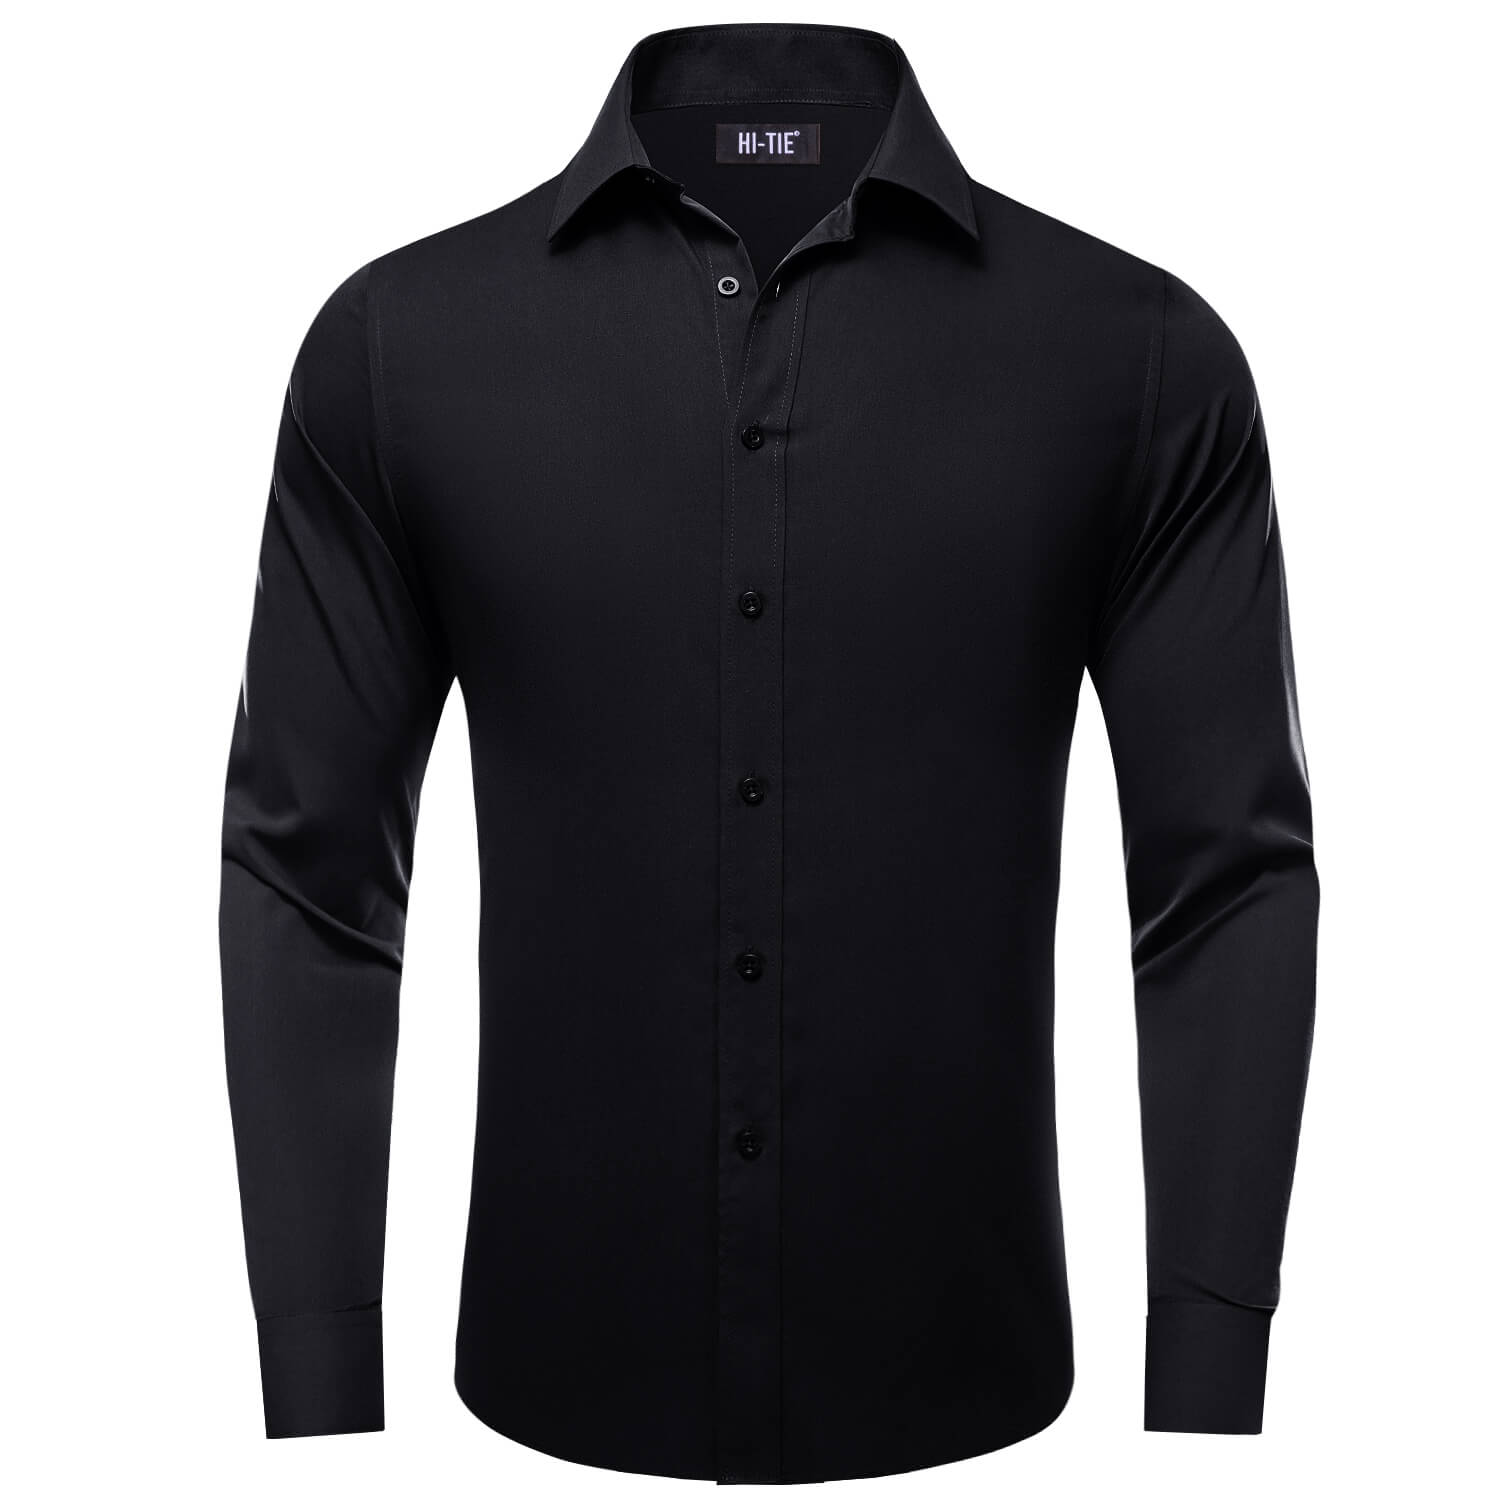  Solid Black Collar Shirt